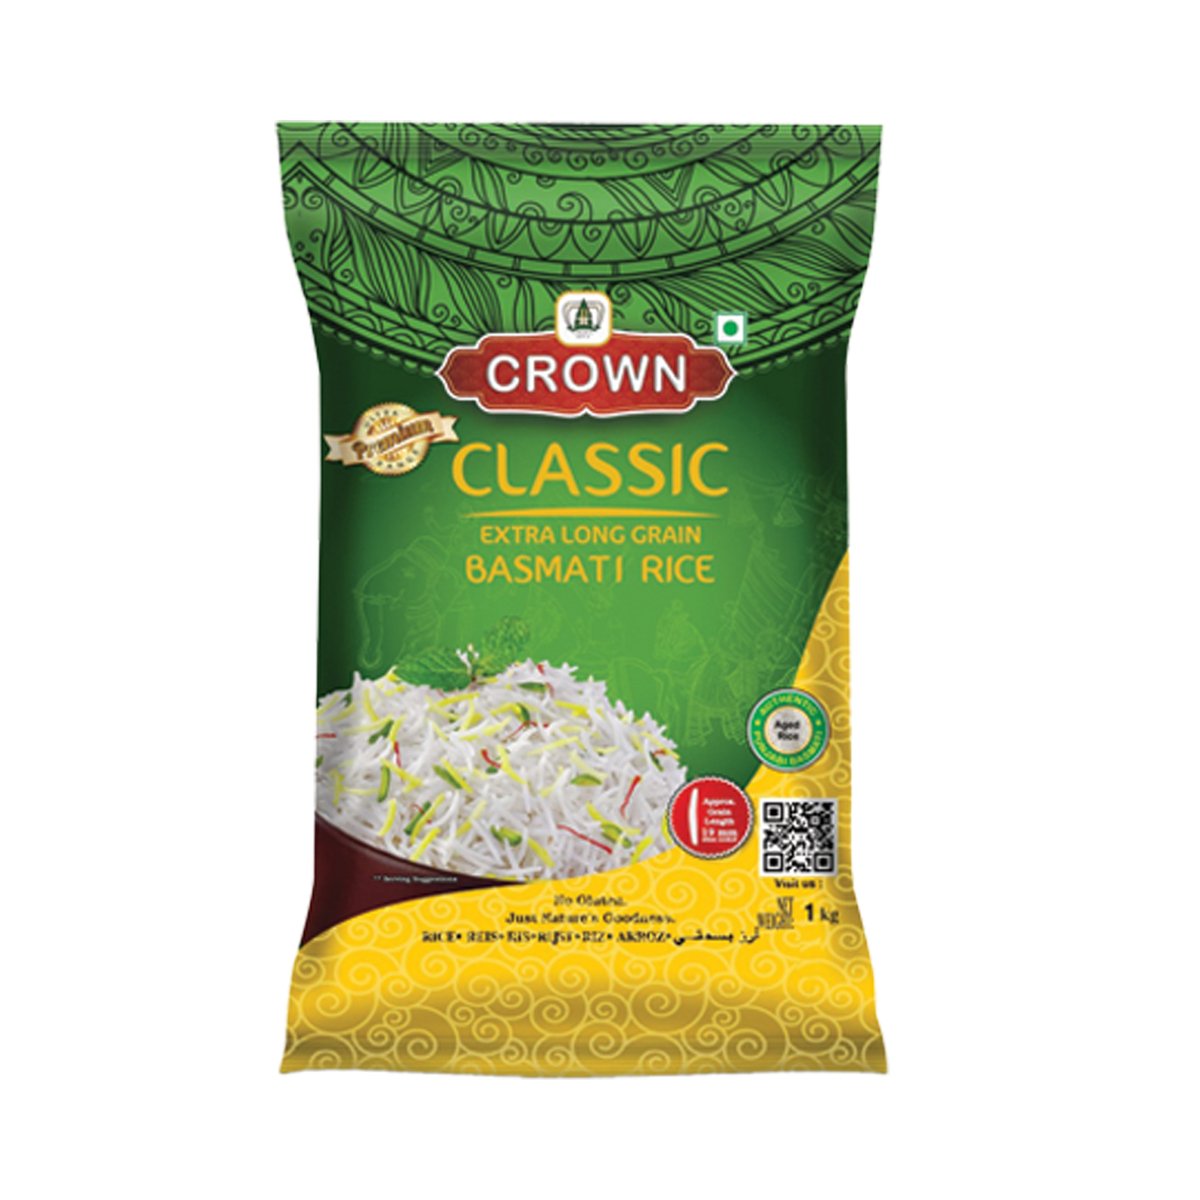 Crown Classic Basmati Rice 3 x 1kg